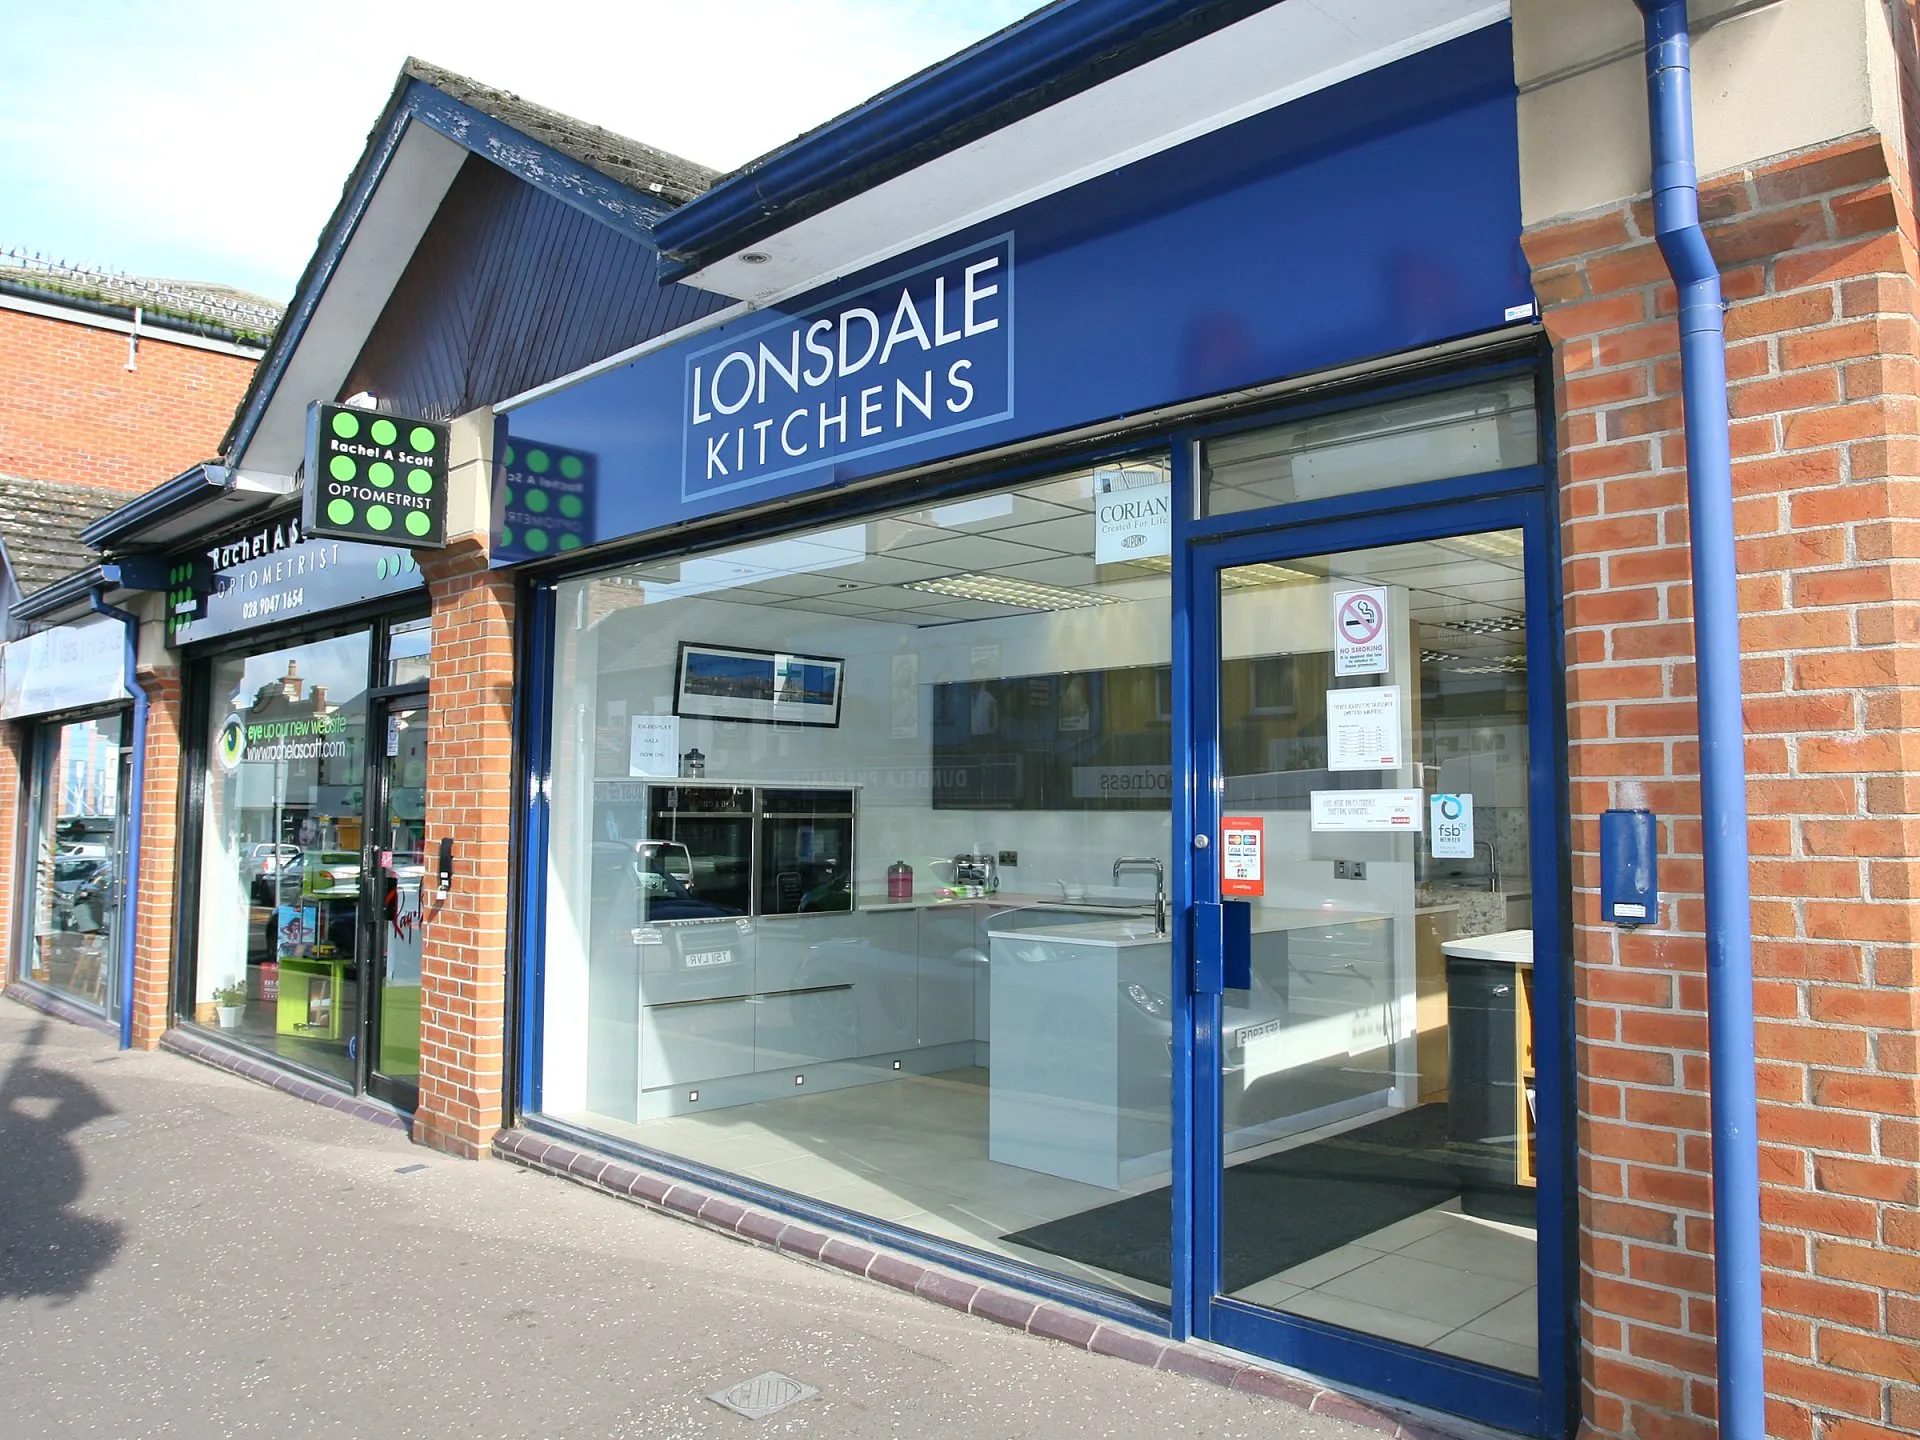 Lonsdale Kitchens shop front